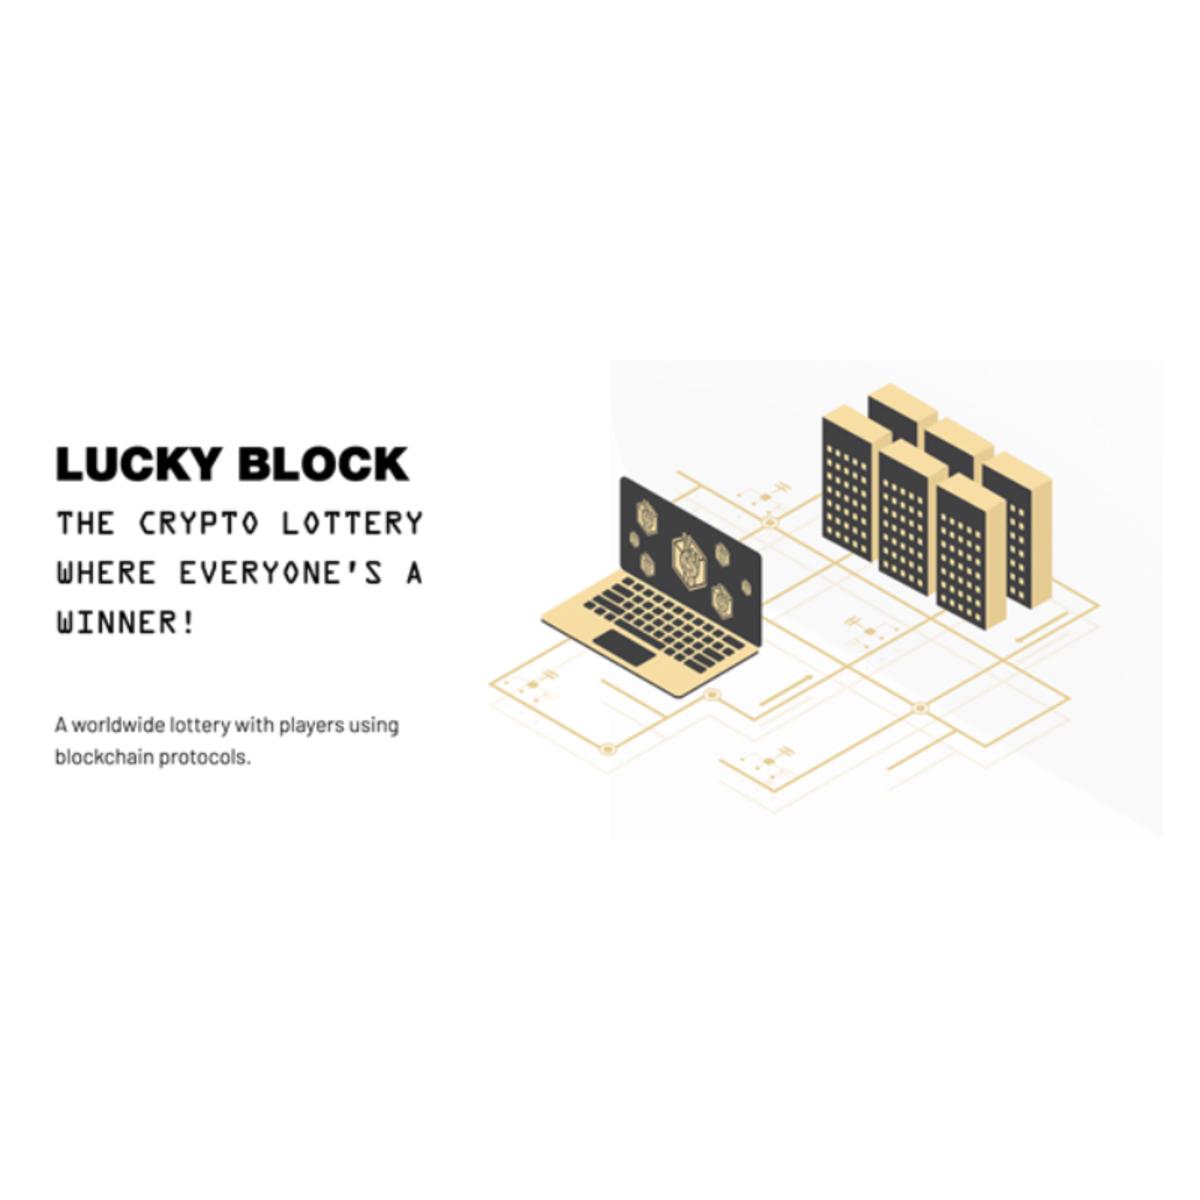 Lucky blocks originated